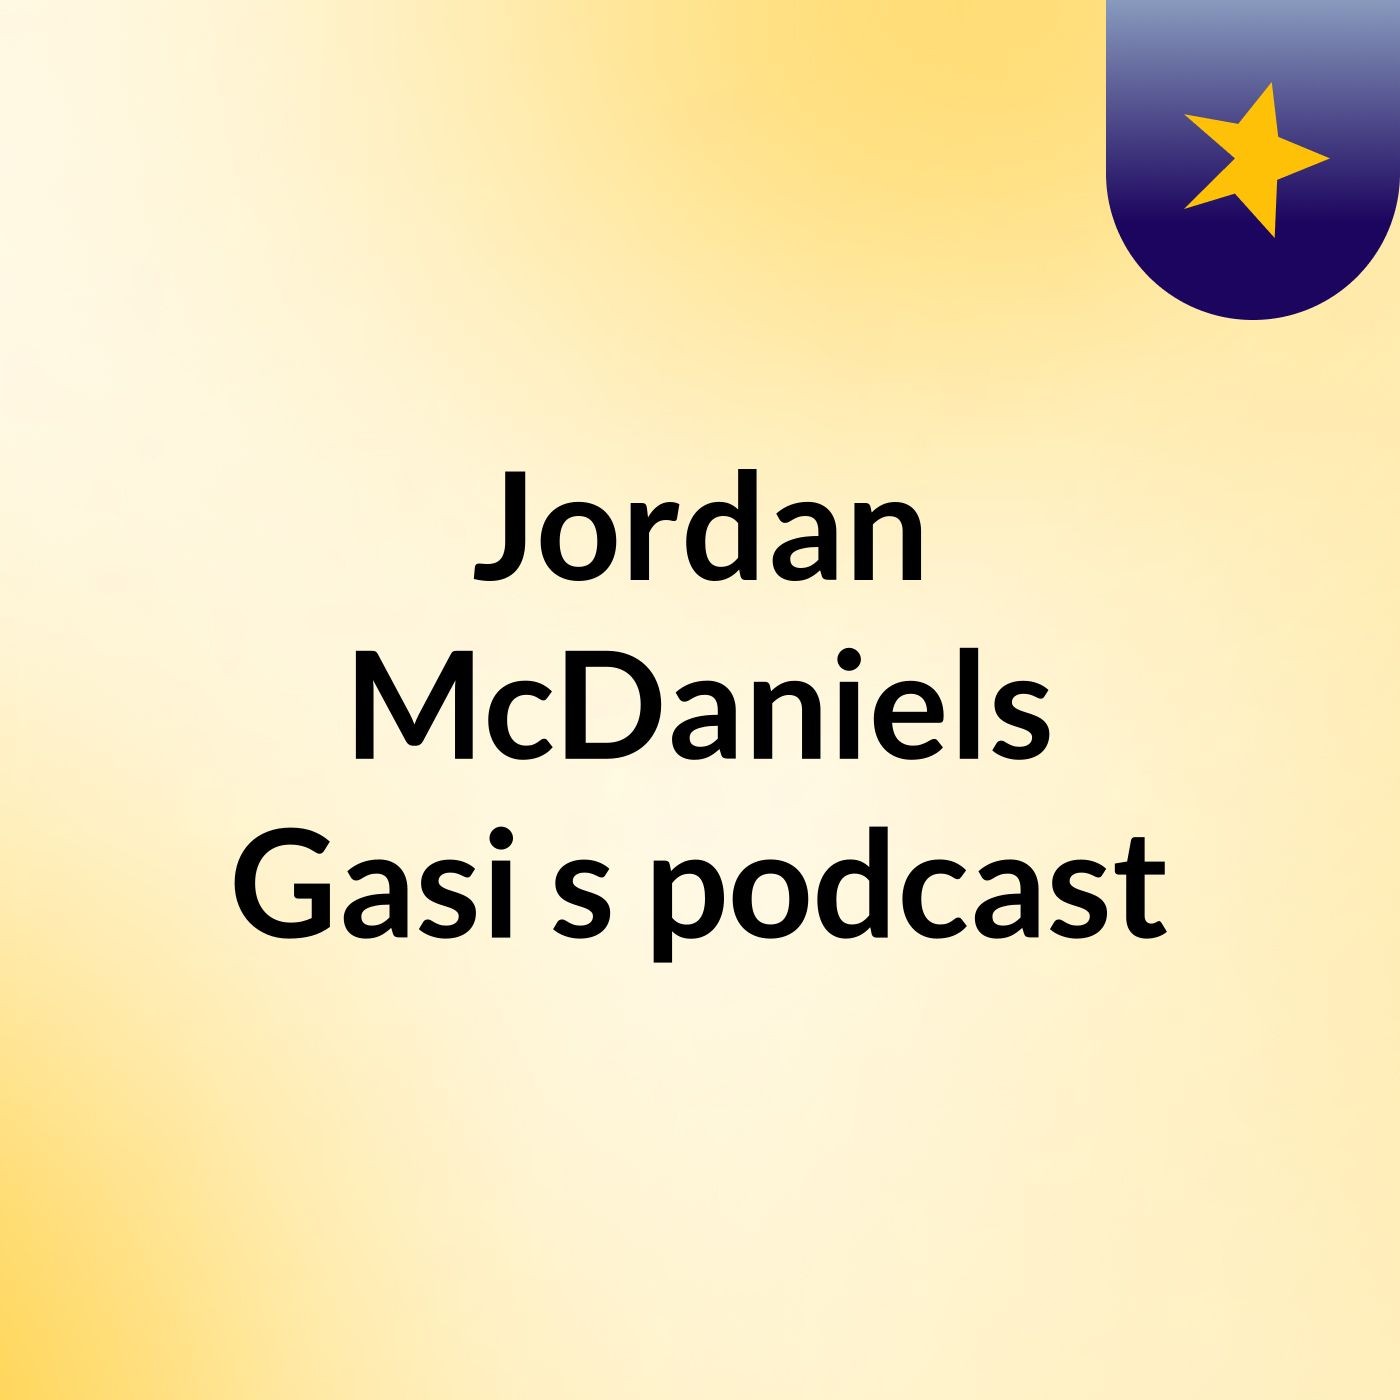 Jordan McDaniels Gasi's podcast